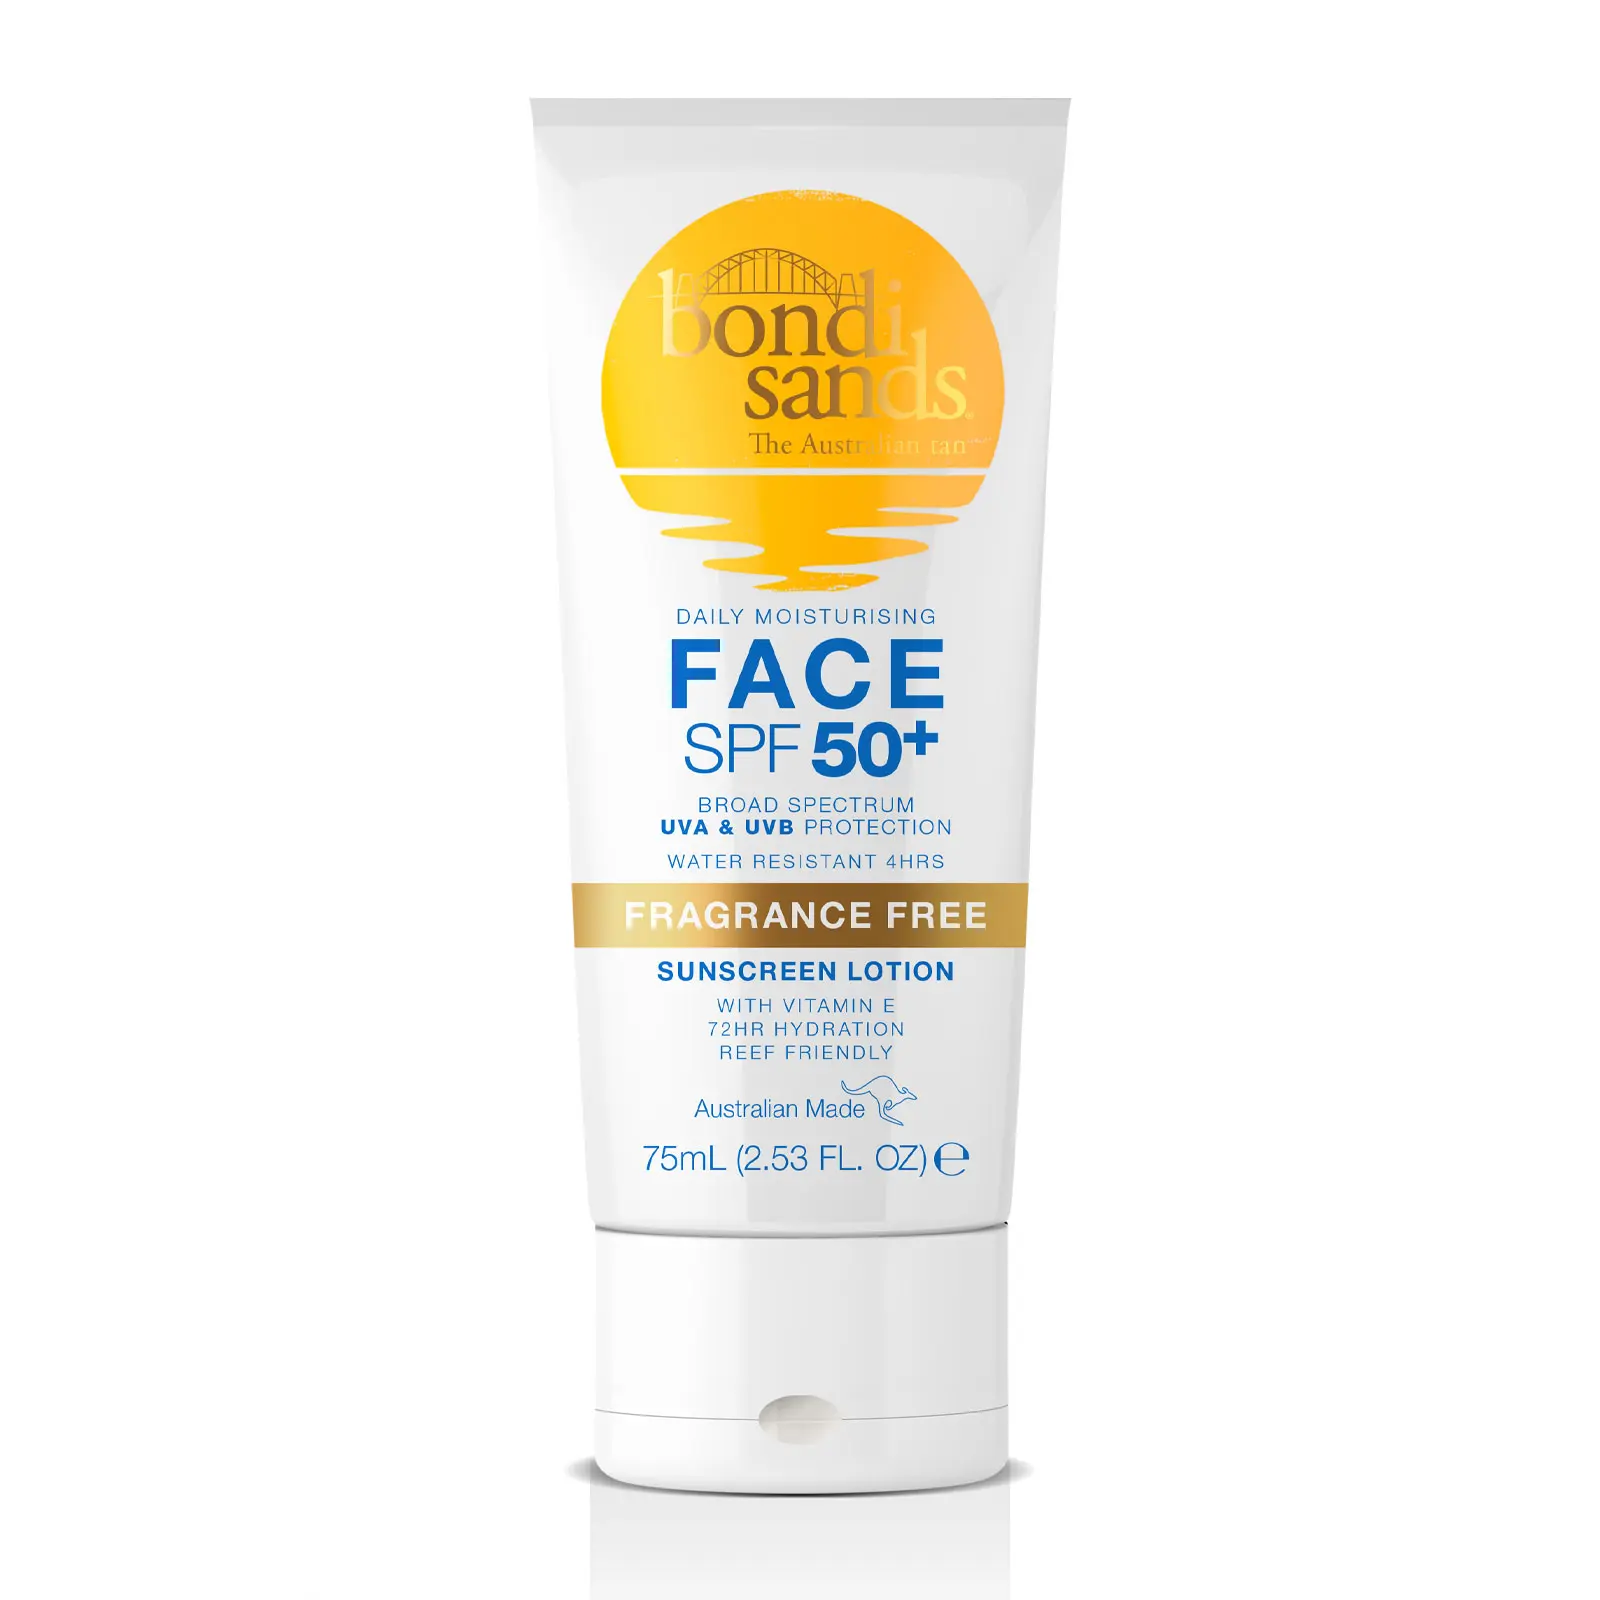 Bondi Sands Sunscreen Lotion SPF50+ Face Discounts and Cashback